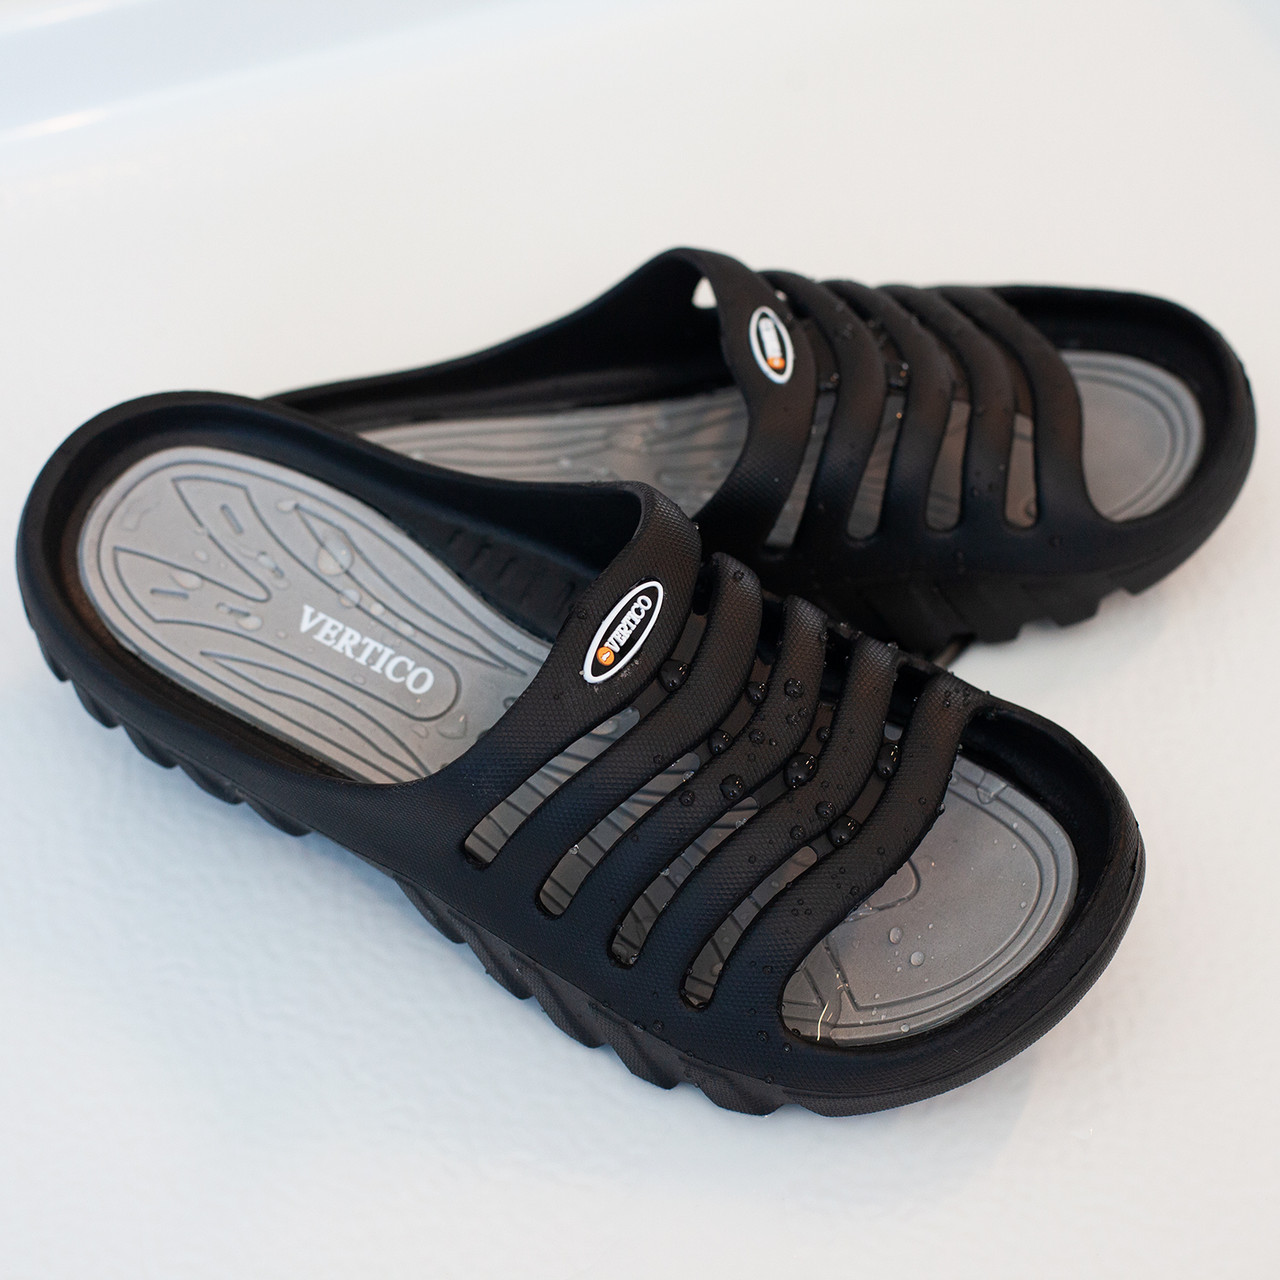 vertico shower shoes